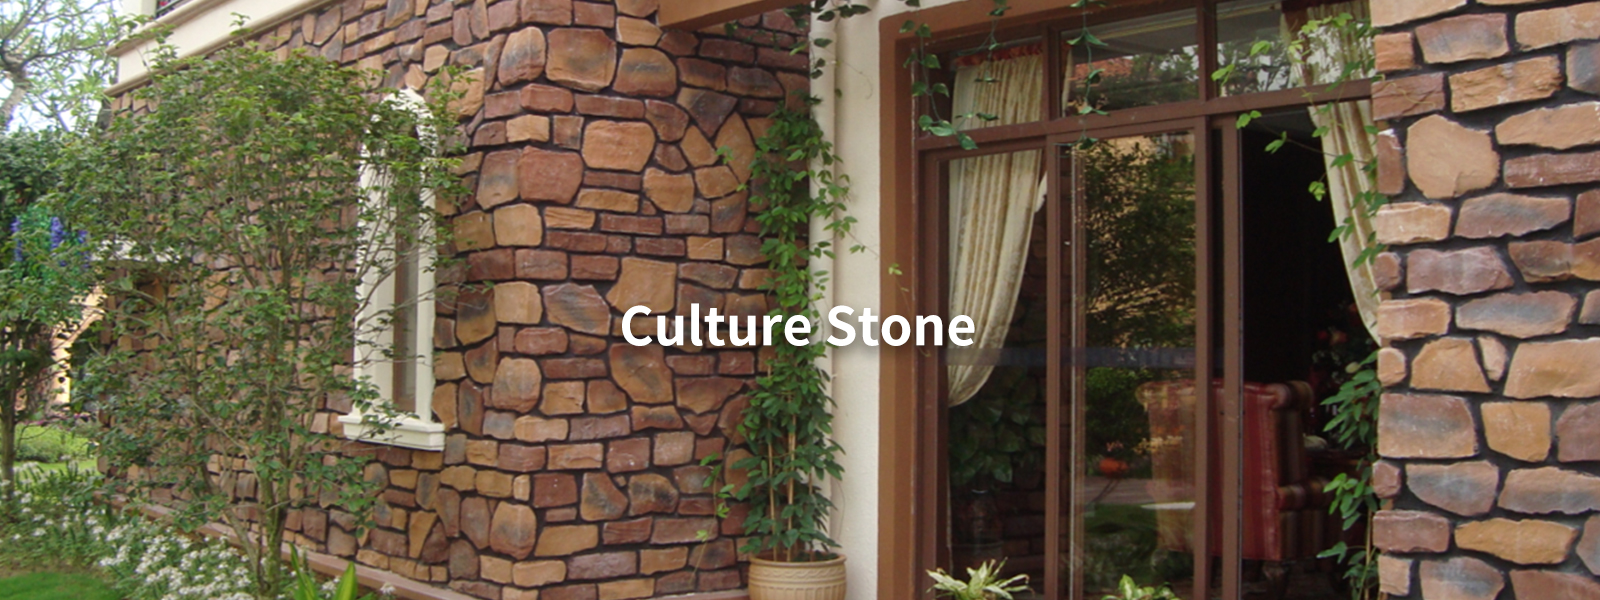 Culture Stone